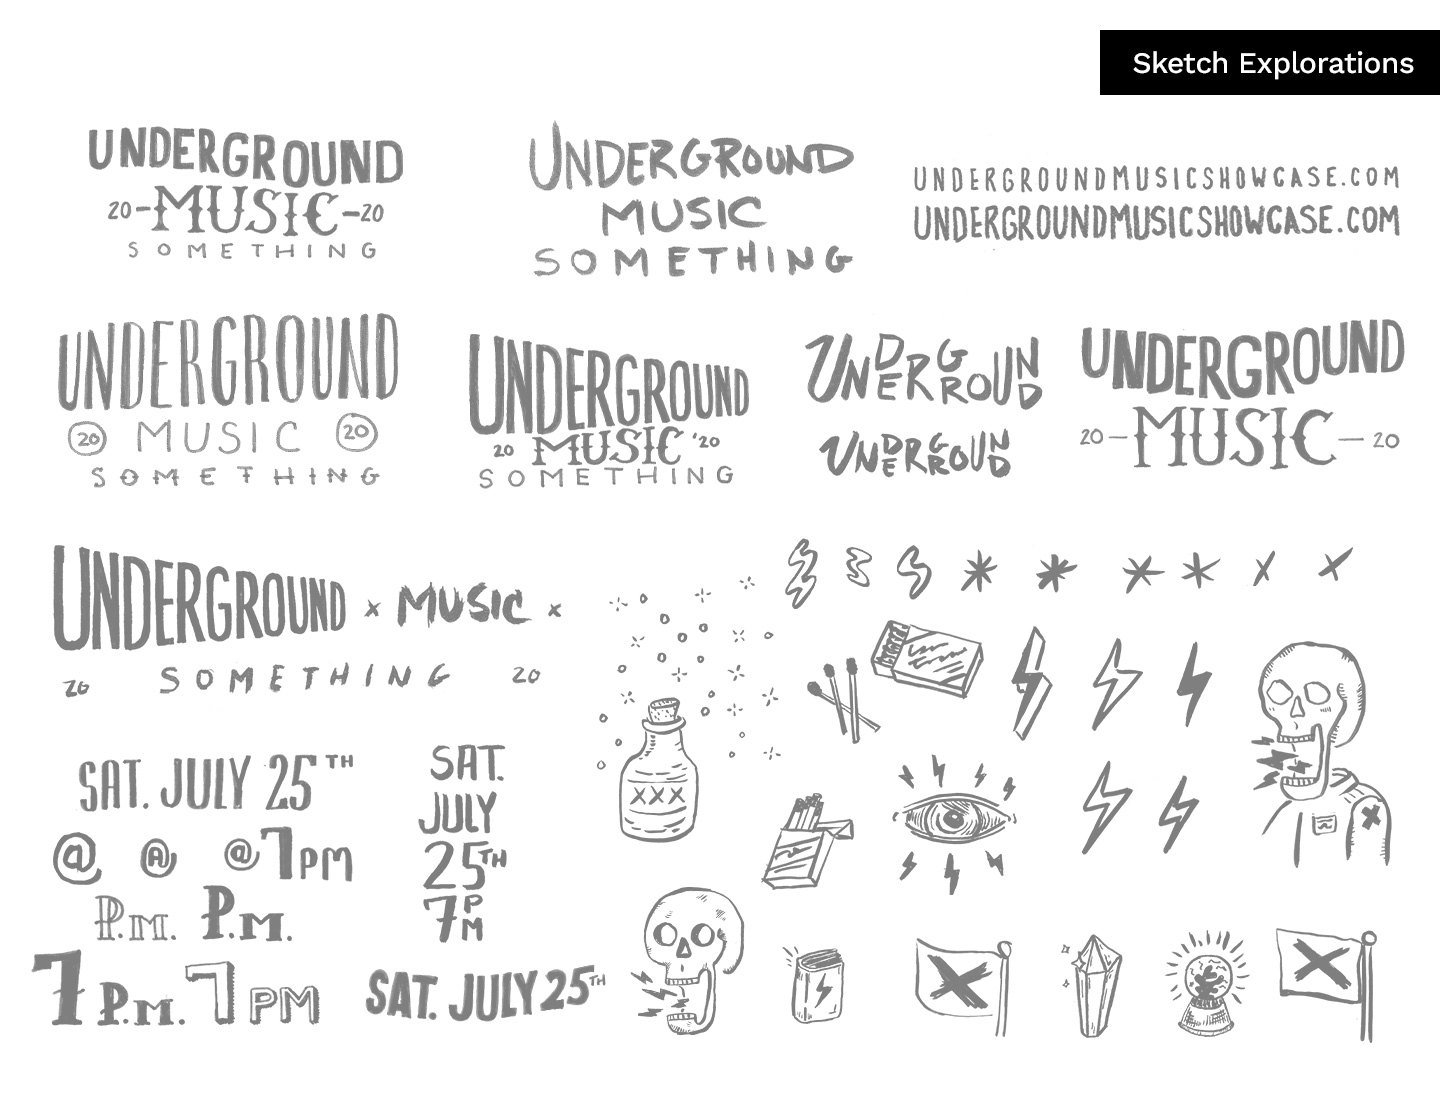 Underground Music Something 2020